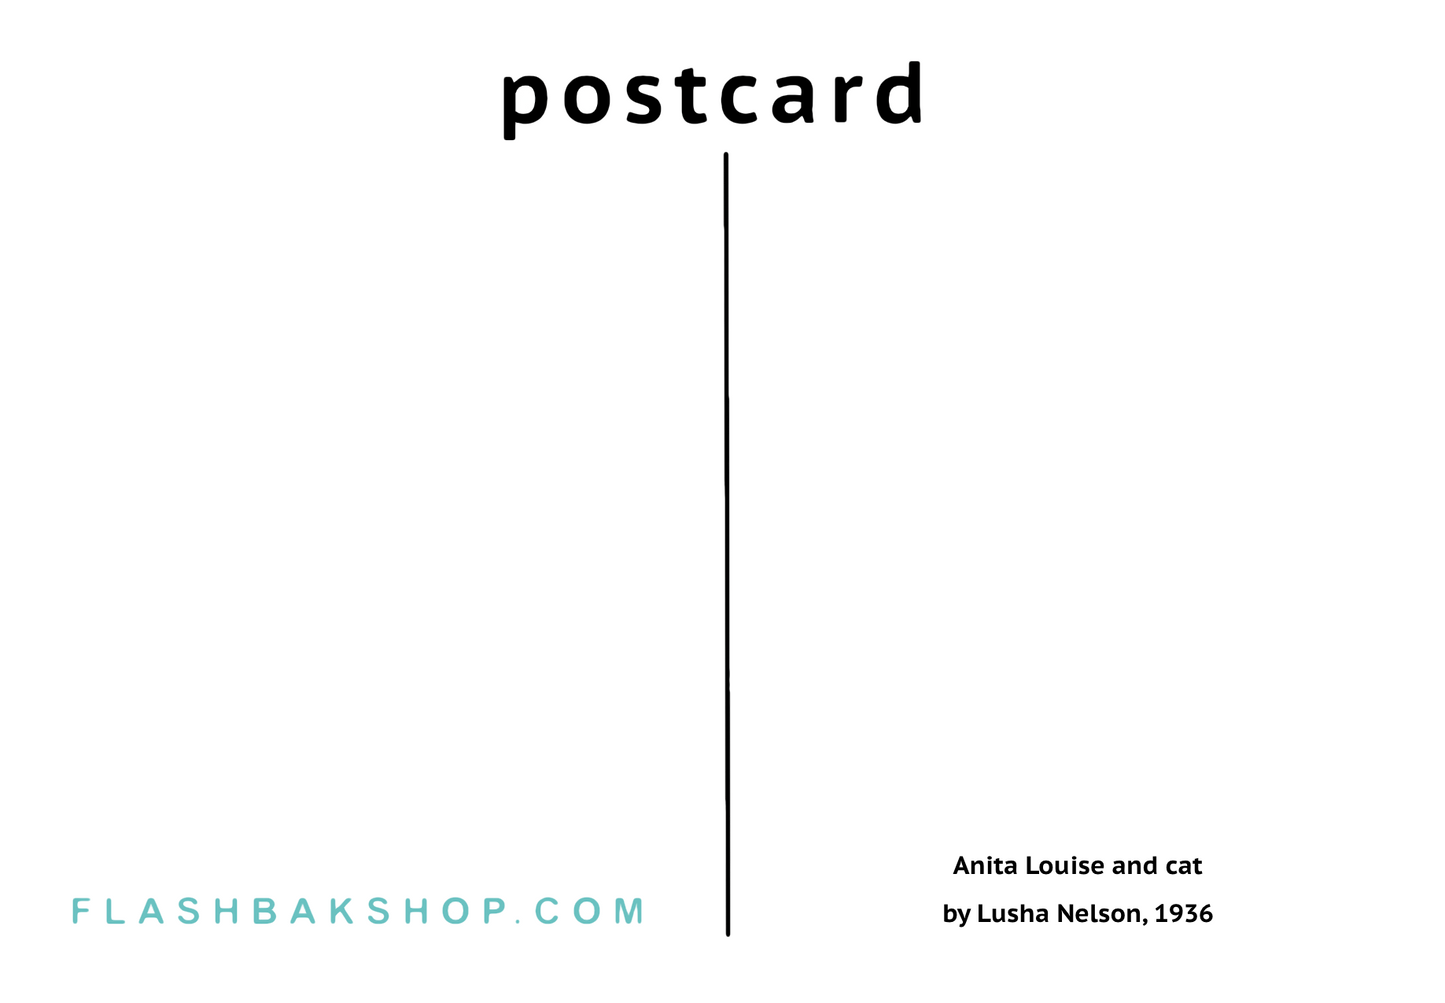 Anita Louise by Lusha Nelson, 1936 - Postcard